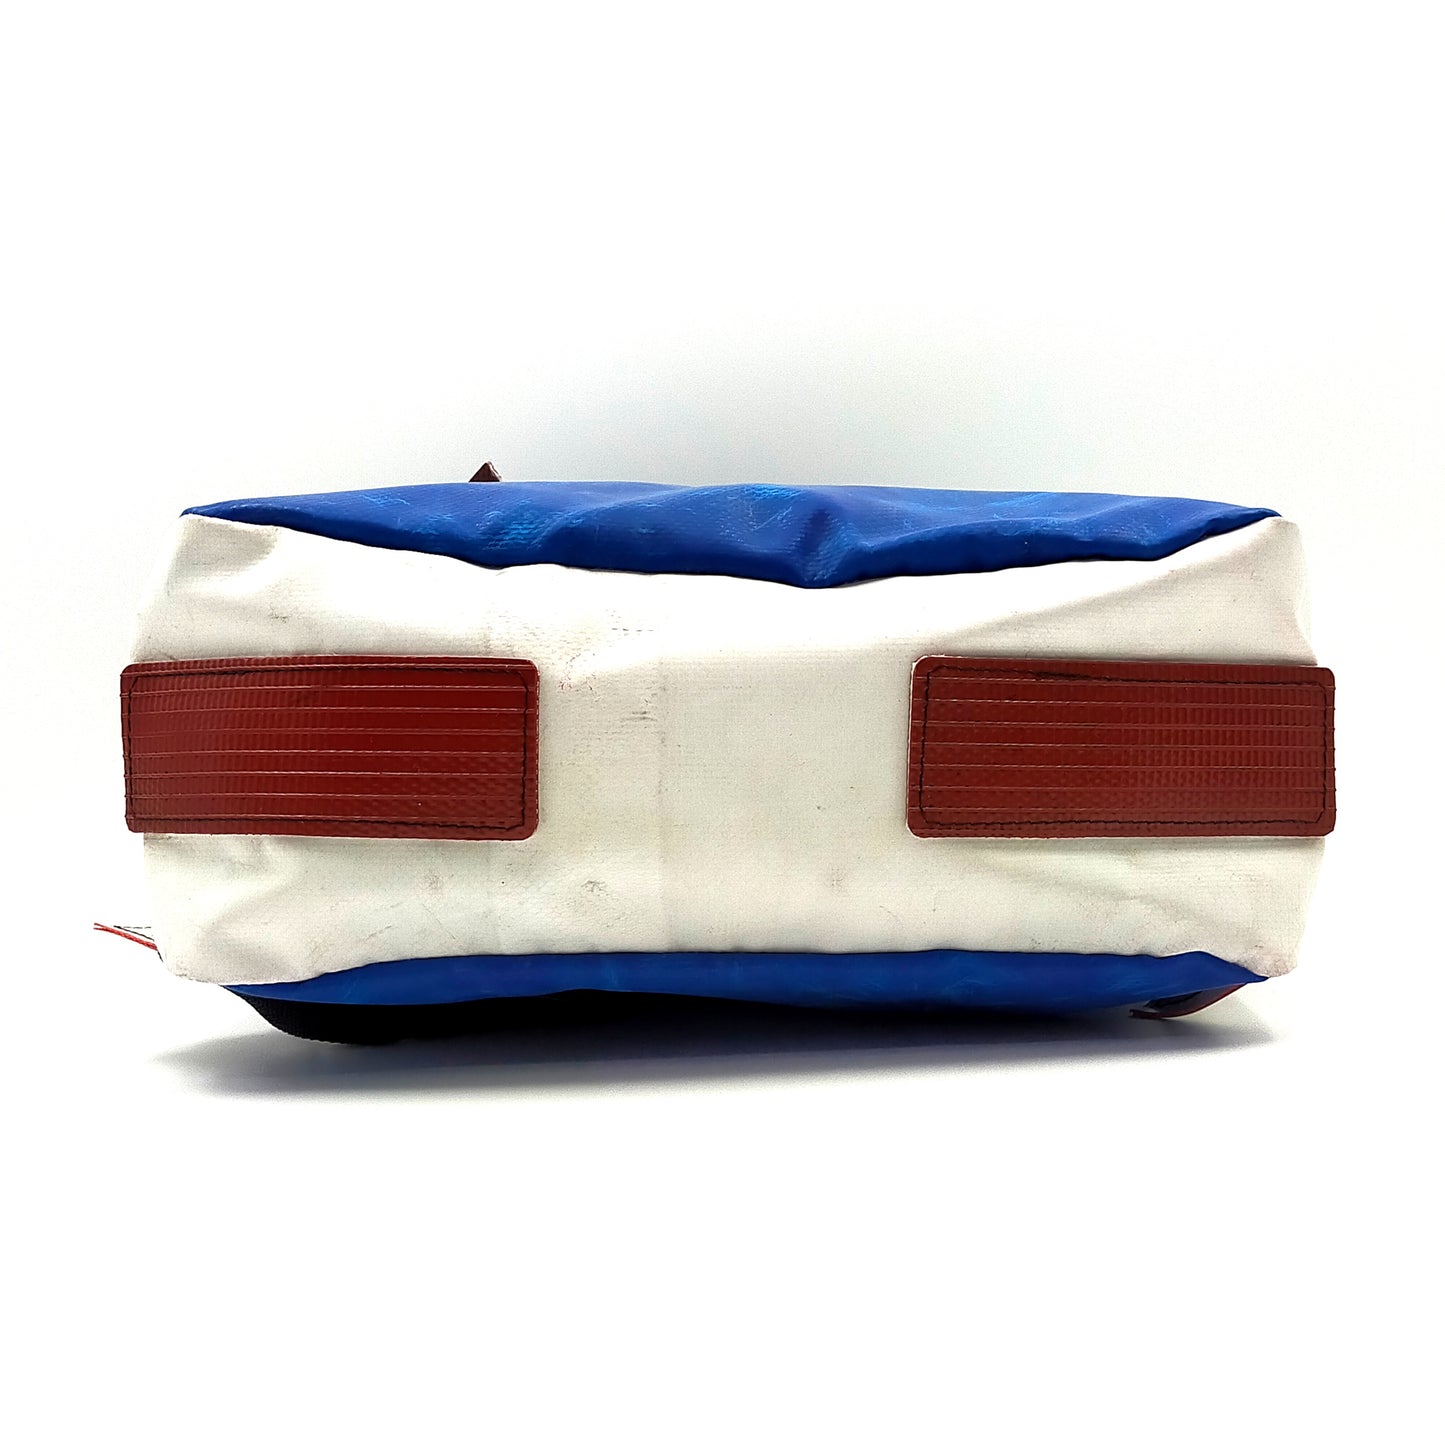 Birch Backpack – Blue – BB09121